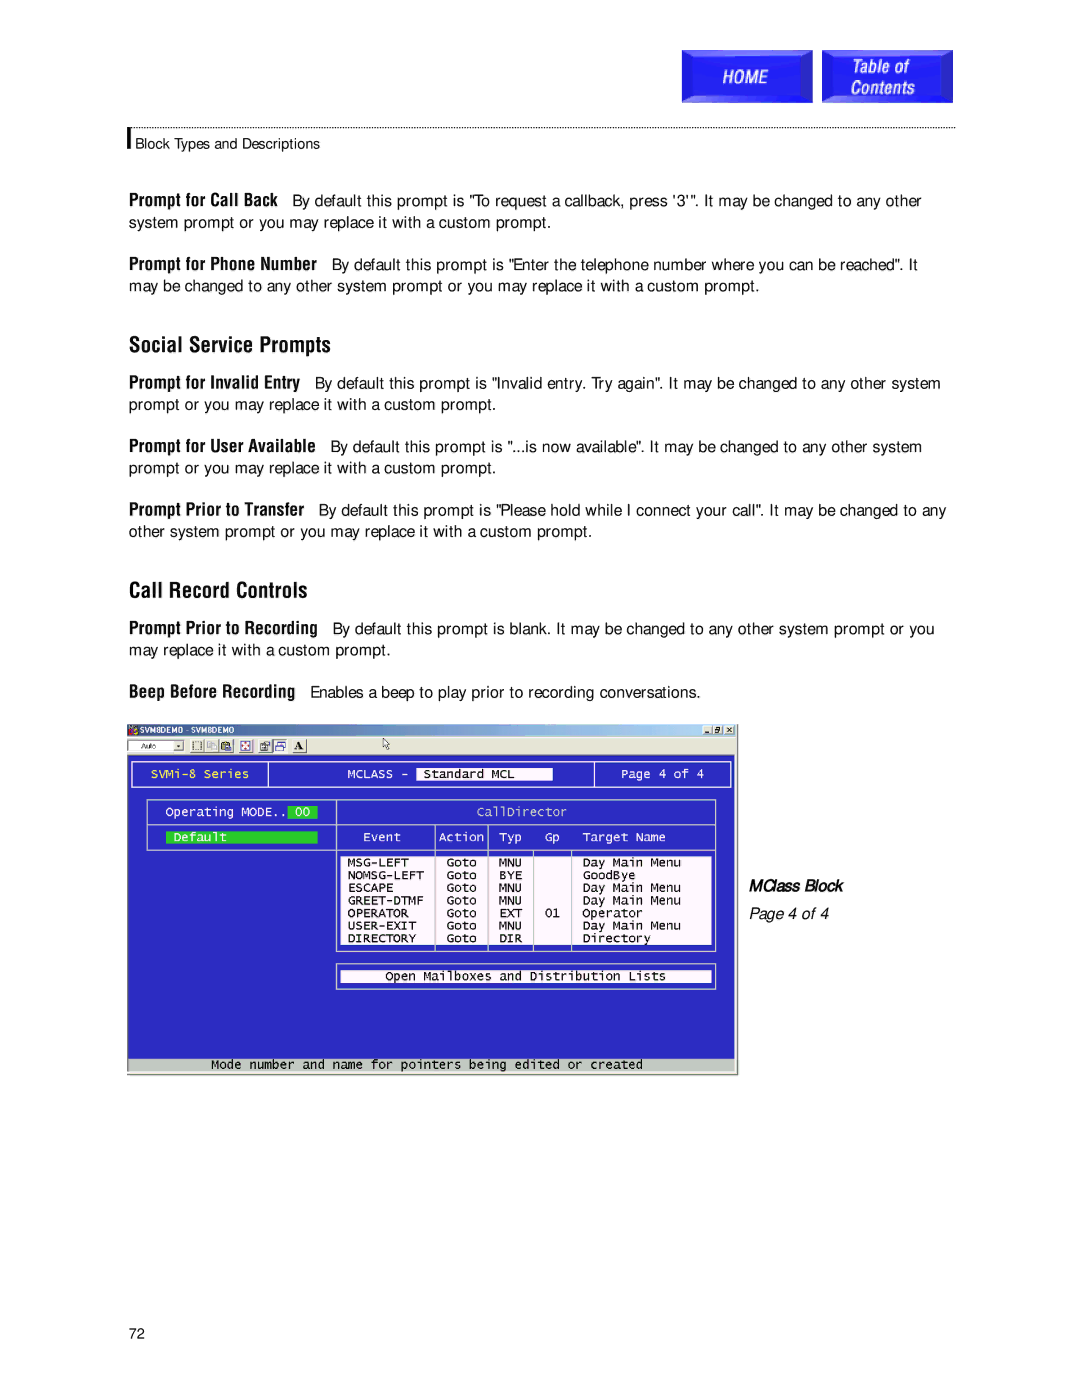 Samsung SVMi-8 technical manual Social Service Prompts, Call Record Controls 